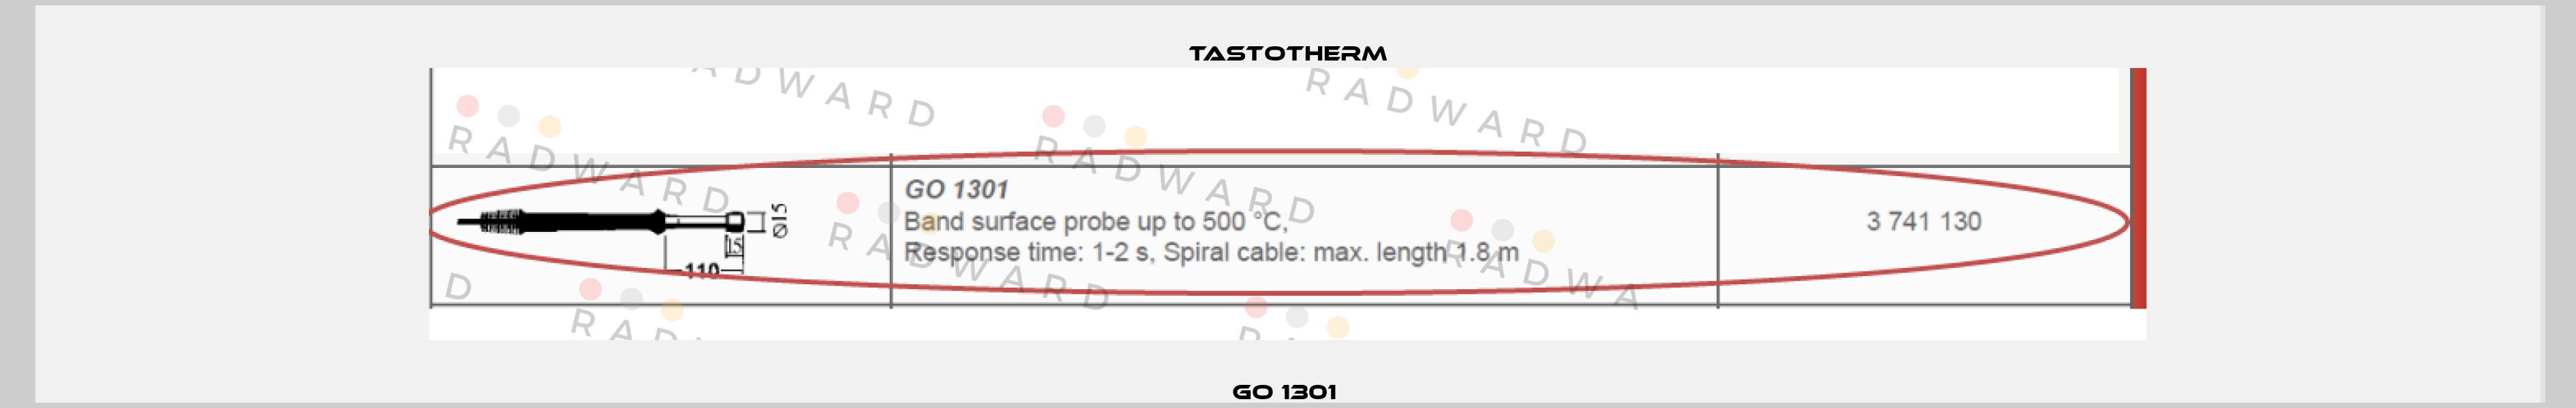 GO 1301  Tastotherm